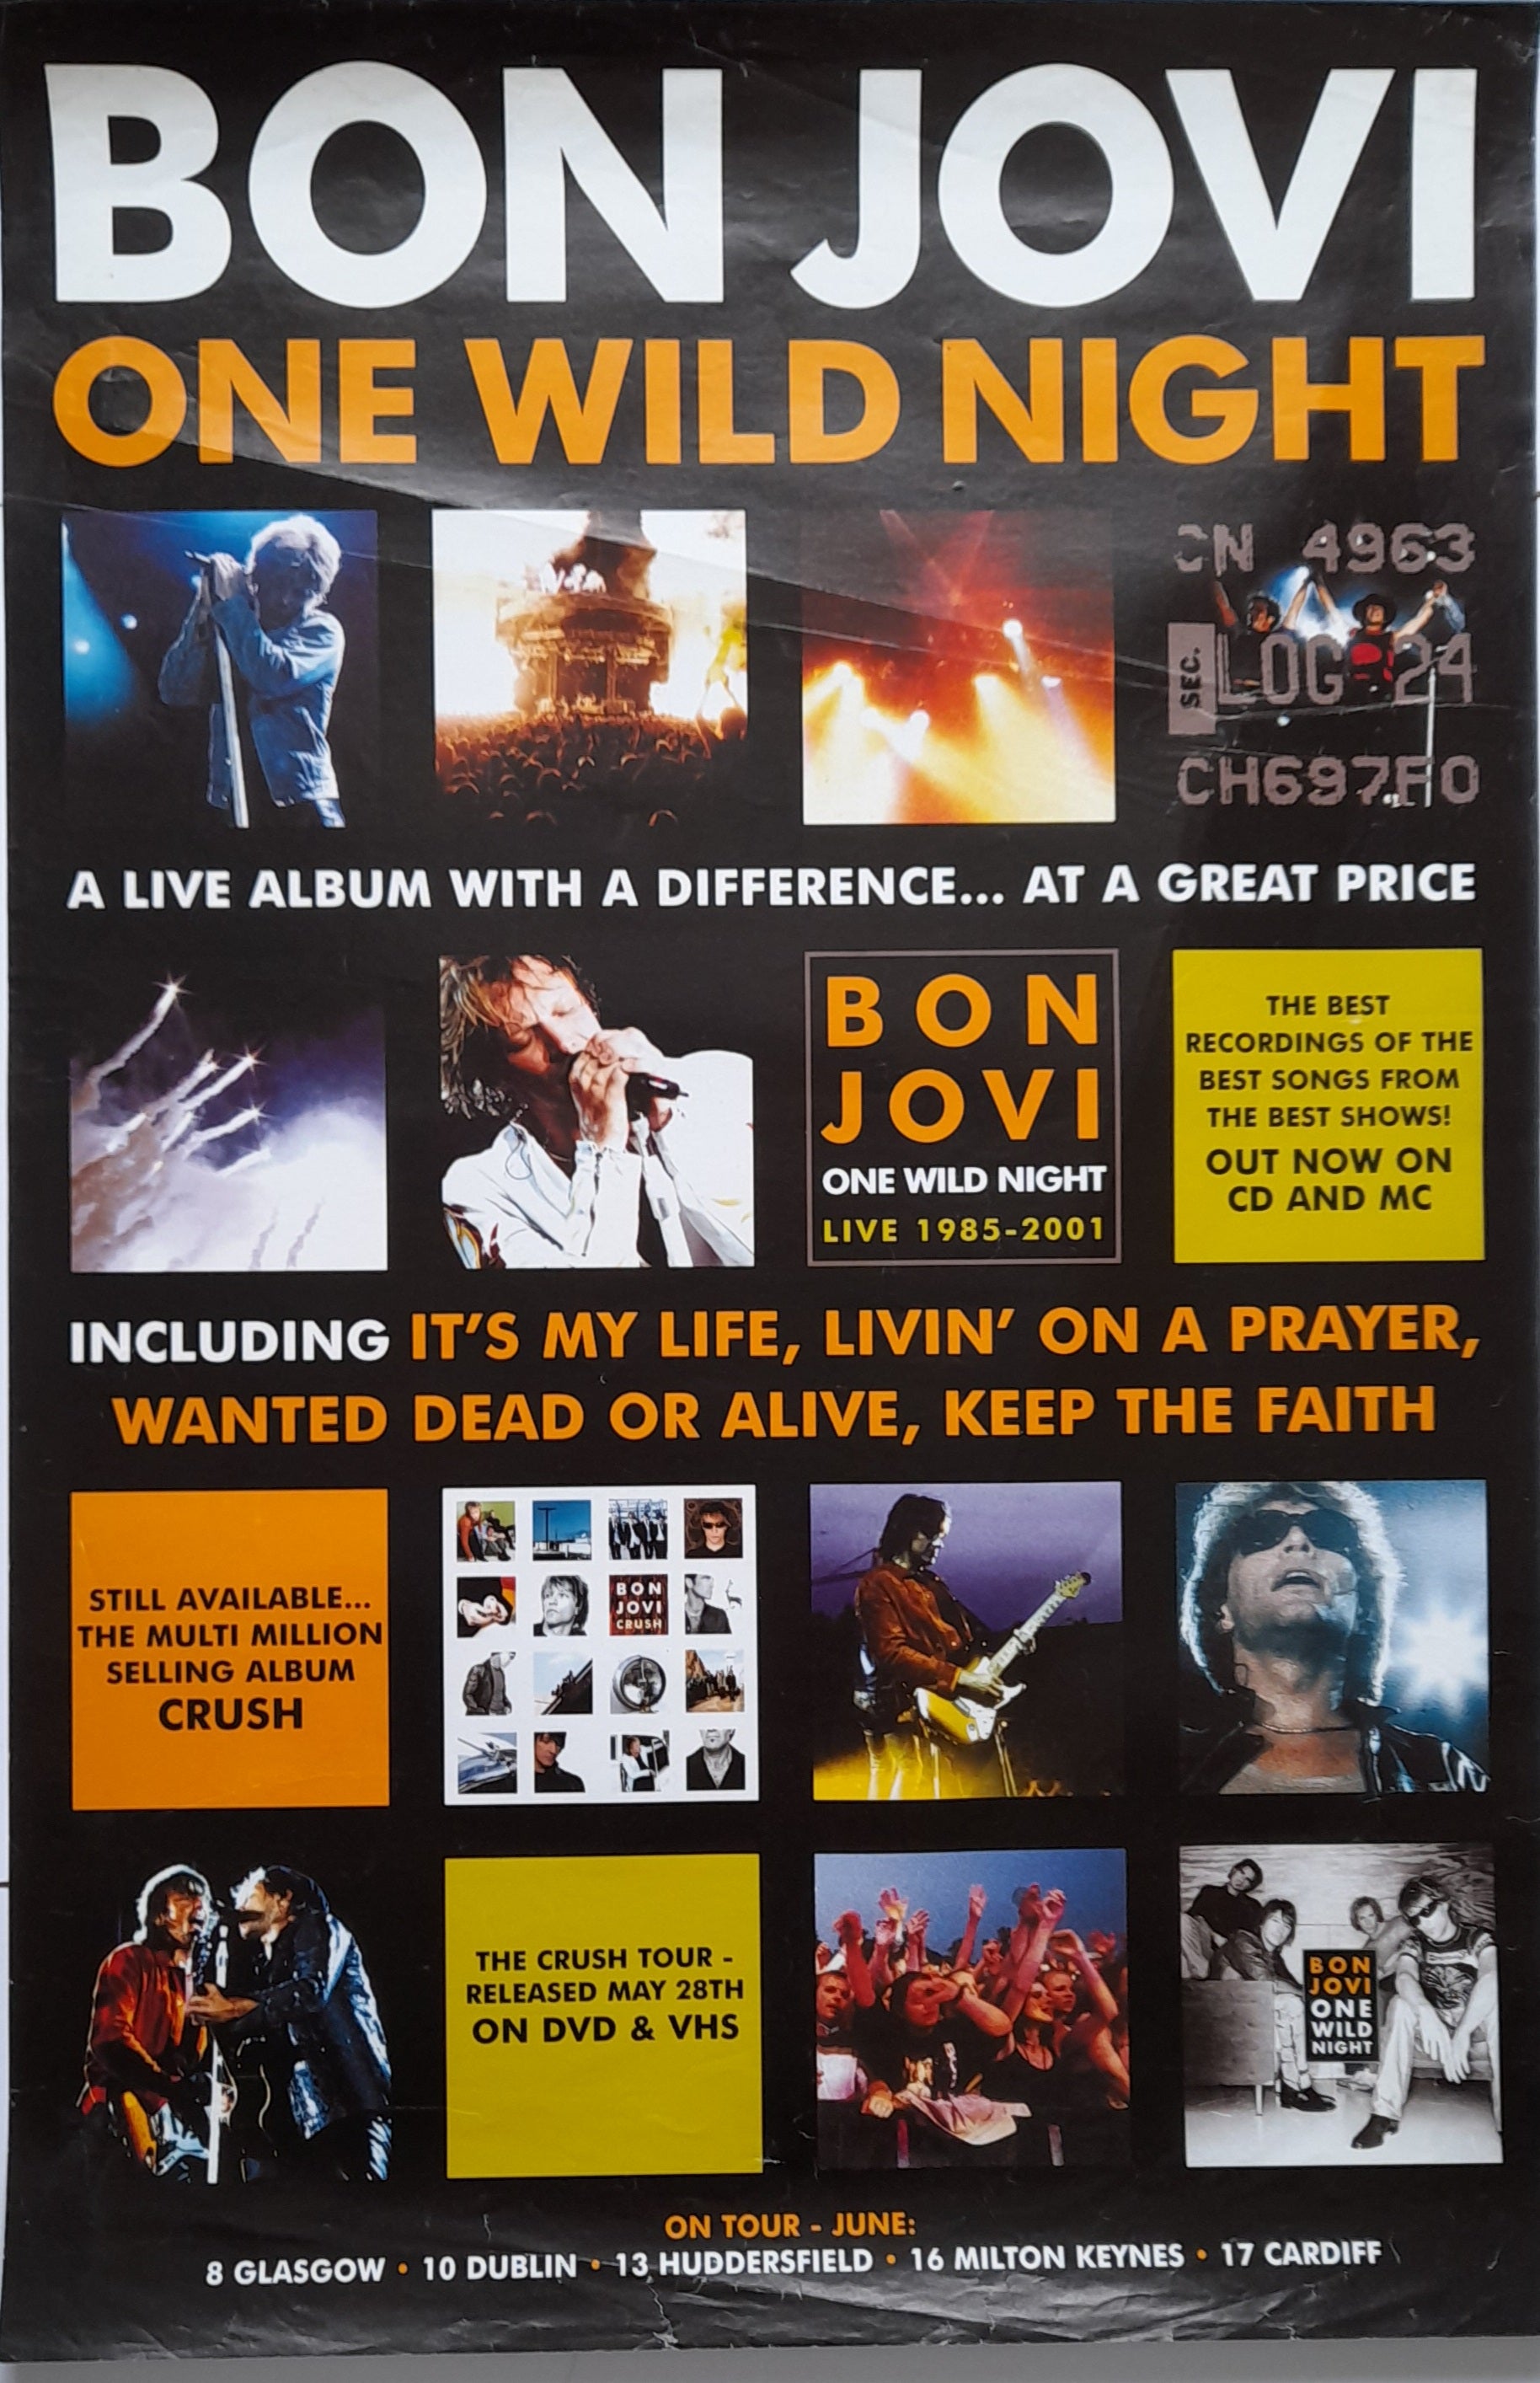 Bon Jovi One Wild Night Live Album UK Promotional Poster -RewindPressPlay